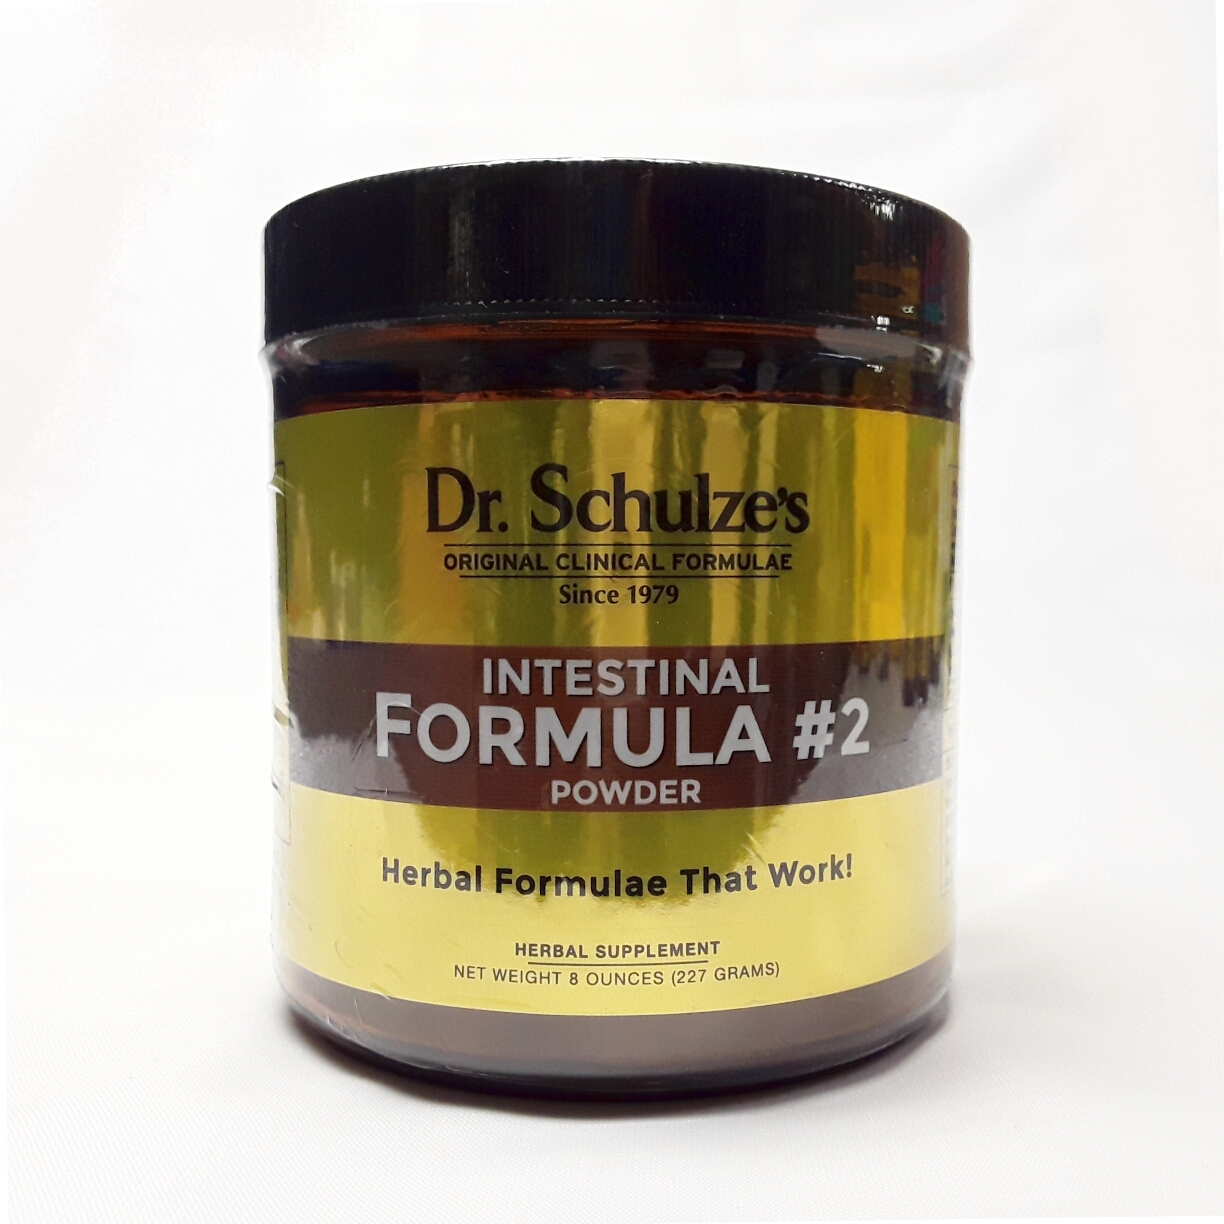 Dr Schulzes Intestinal Formula 2 Powder Website Product Image View 1